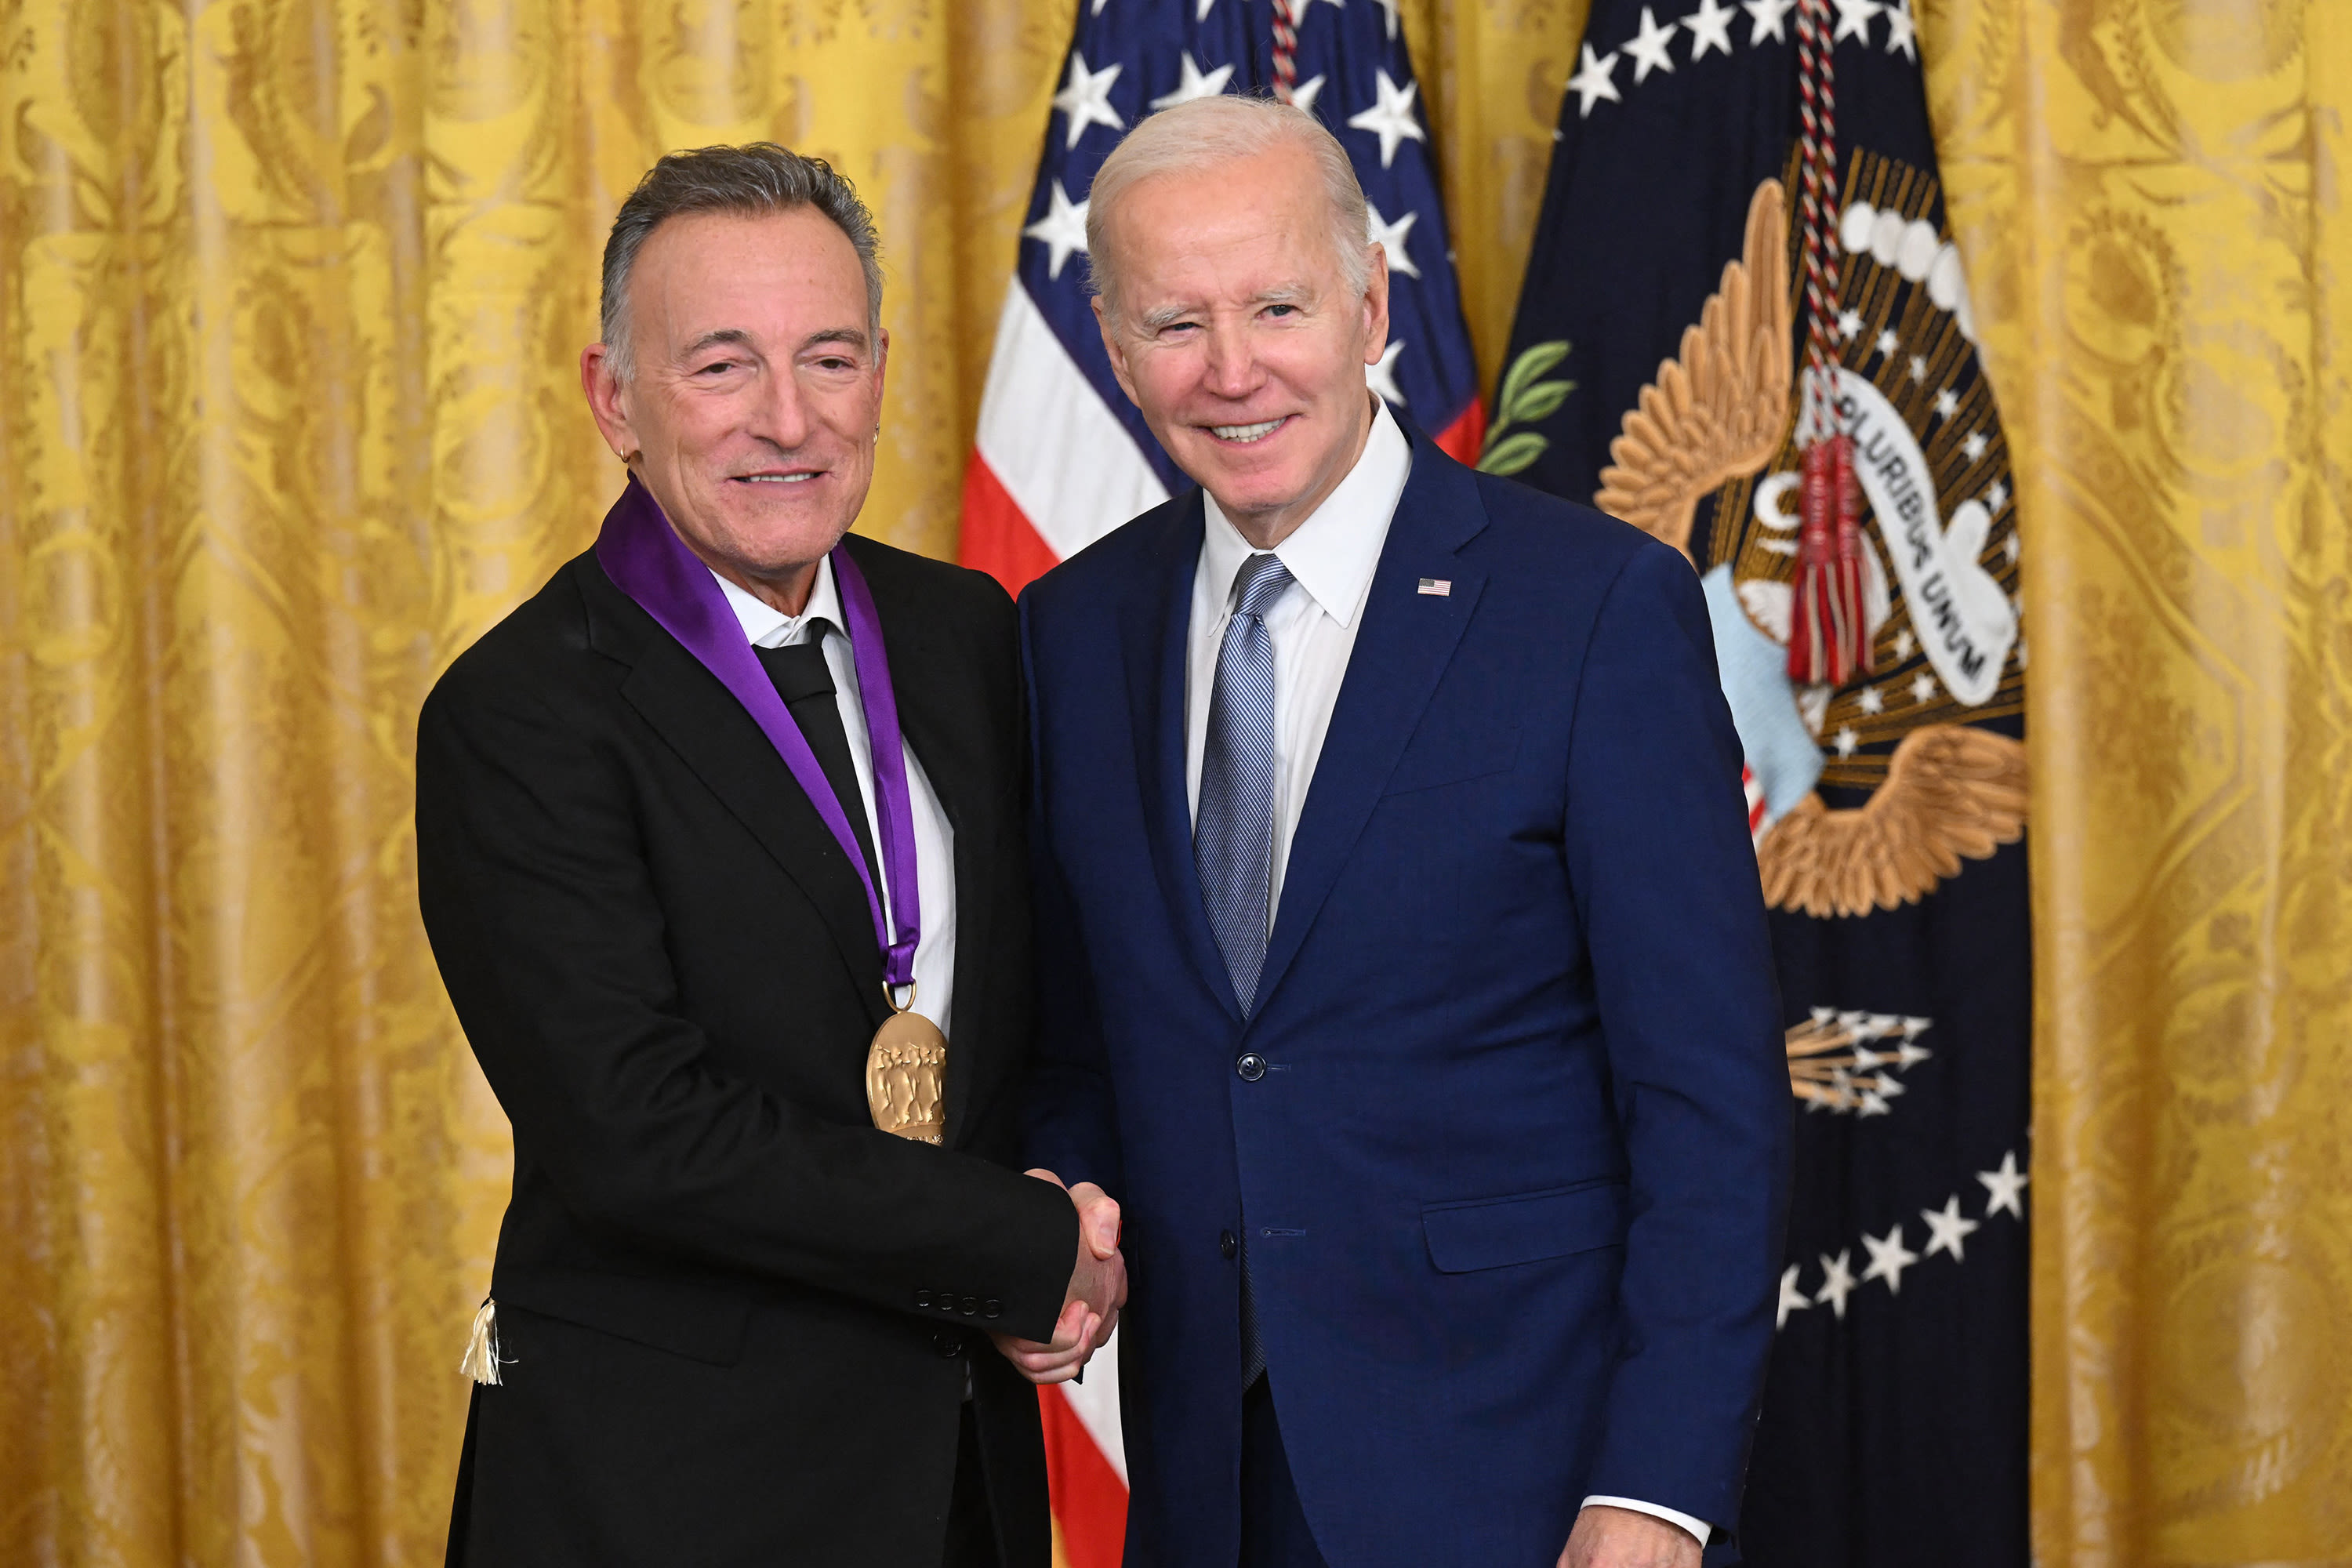 Bruce Springsteen, 74, achieves billionaire status